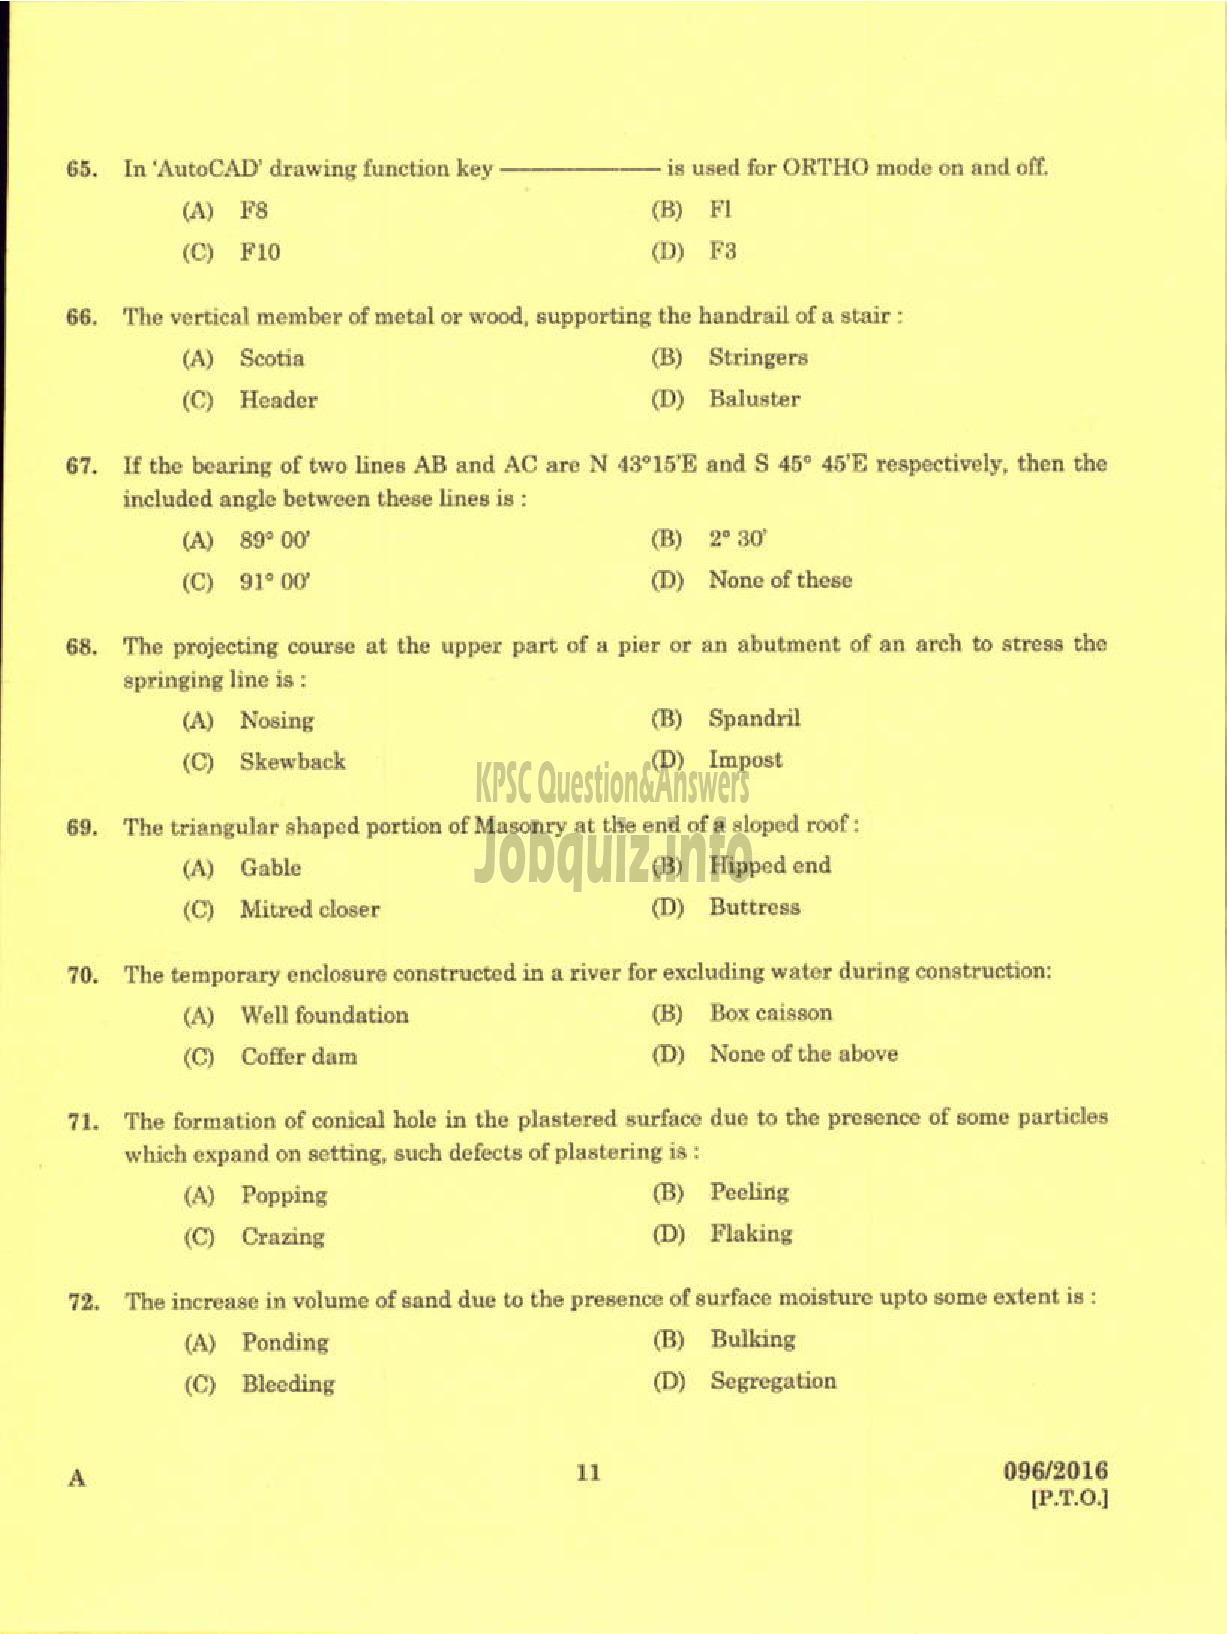 Kerala PSC Question Paper - TRADESMAN CIVIL TECHNICAL EDUCATION-9